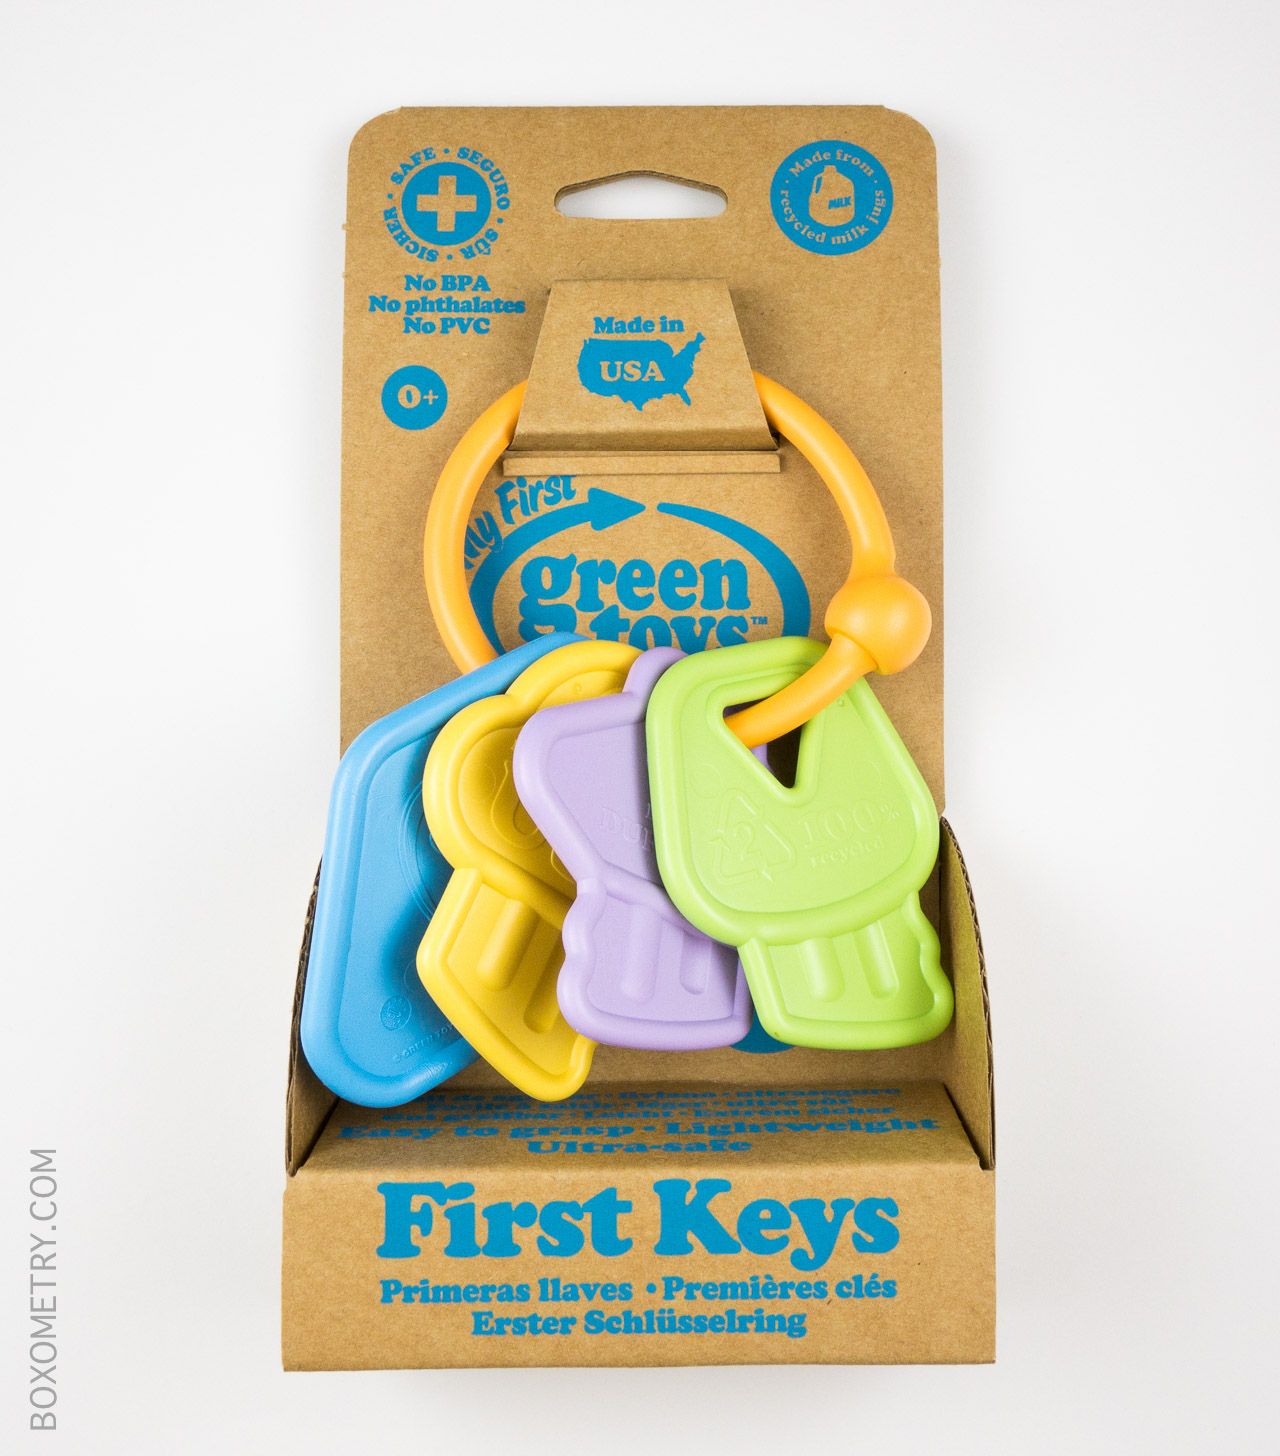 Citrus Lane January 2015 Green Toys First Keys